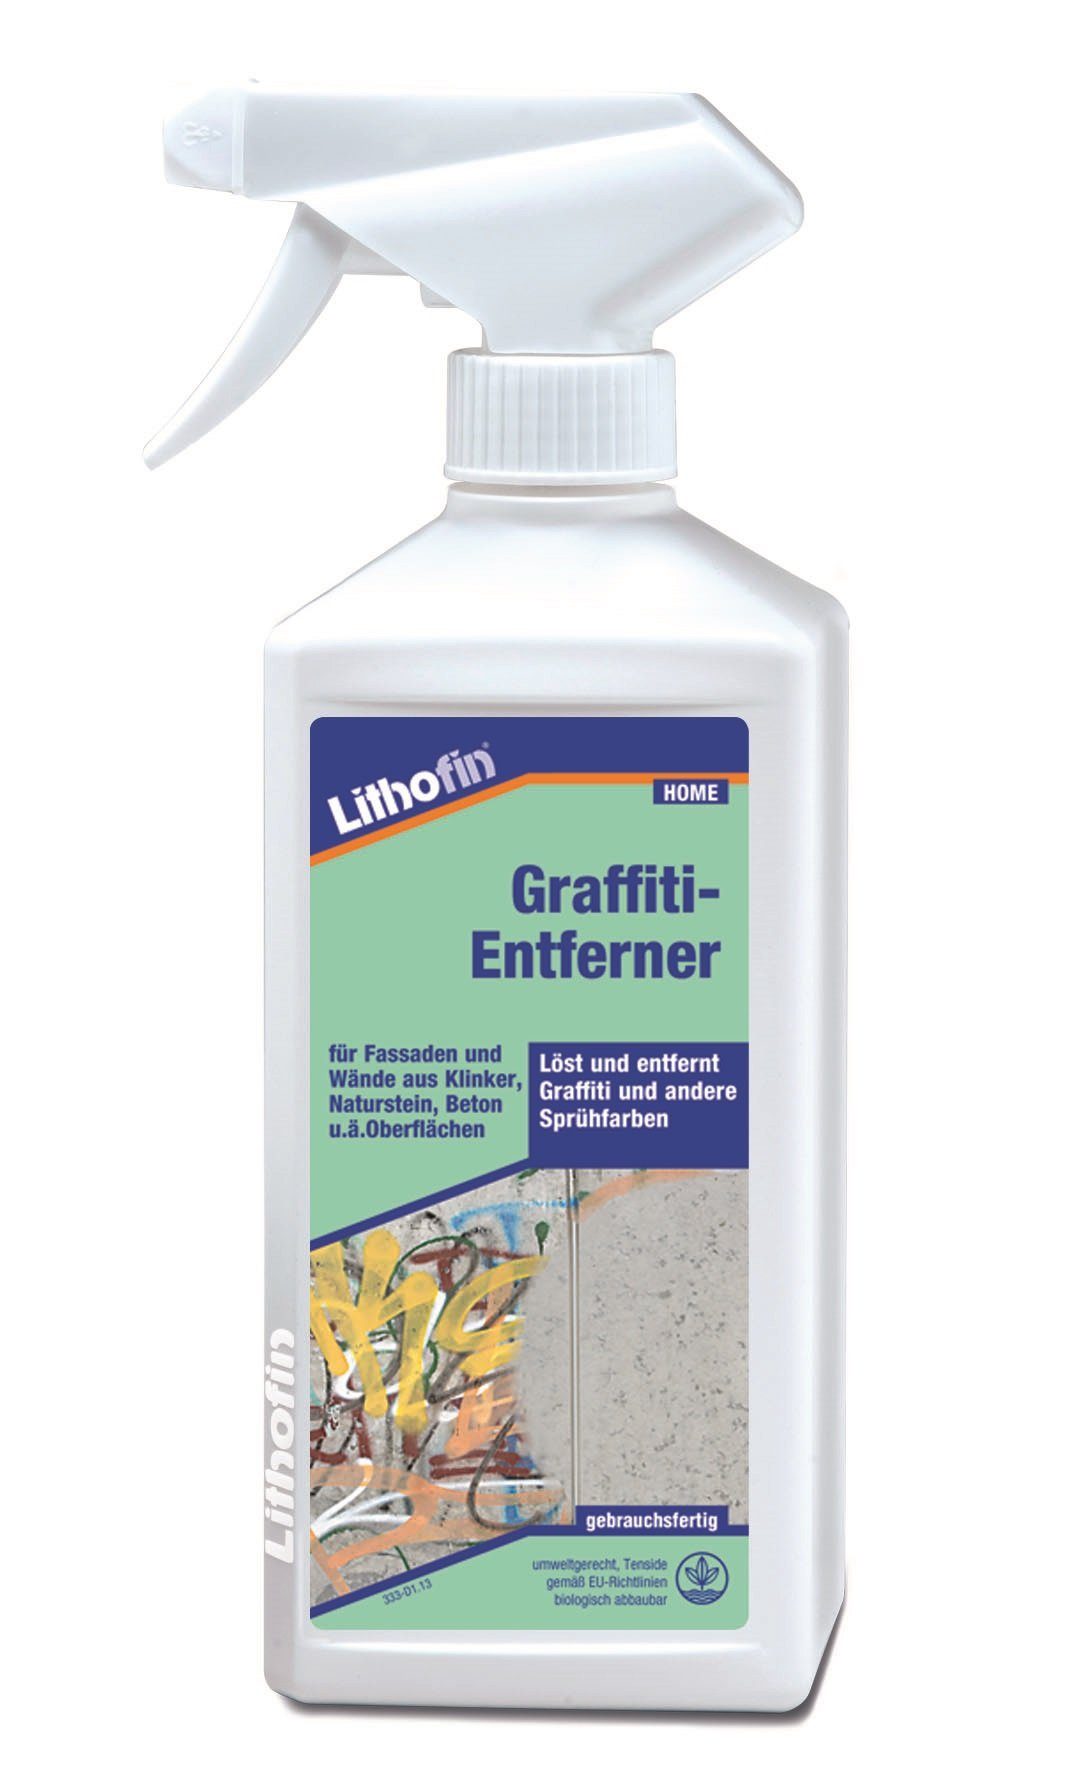 Lithofin LITHOFIN Graffiti-Entferner, 500ml Naturstein-Reiniger